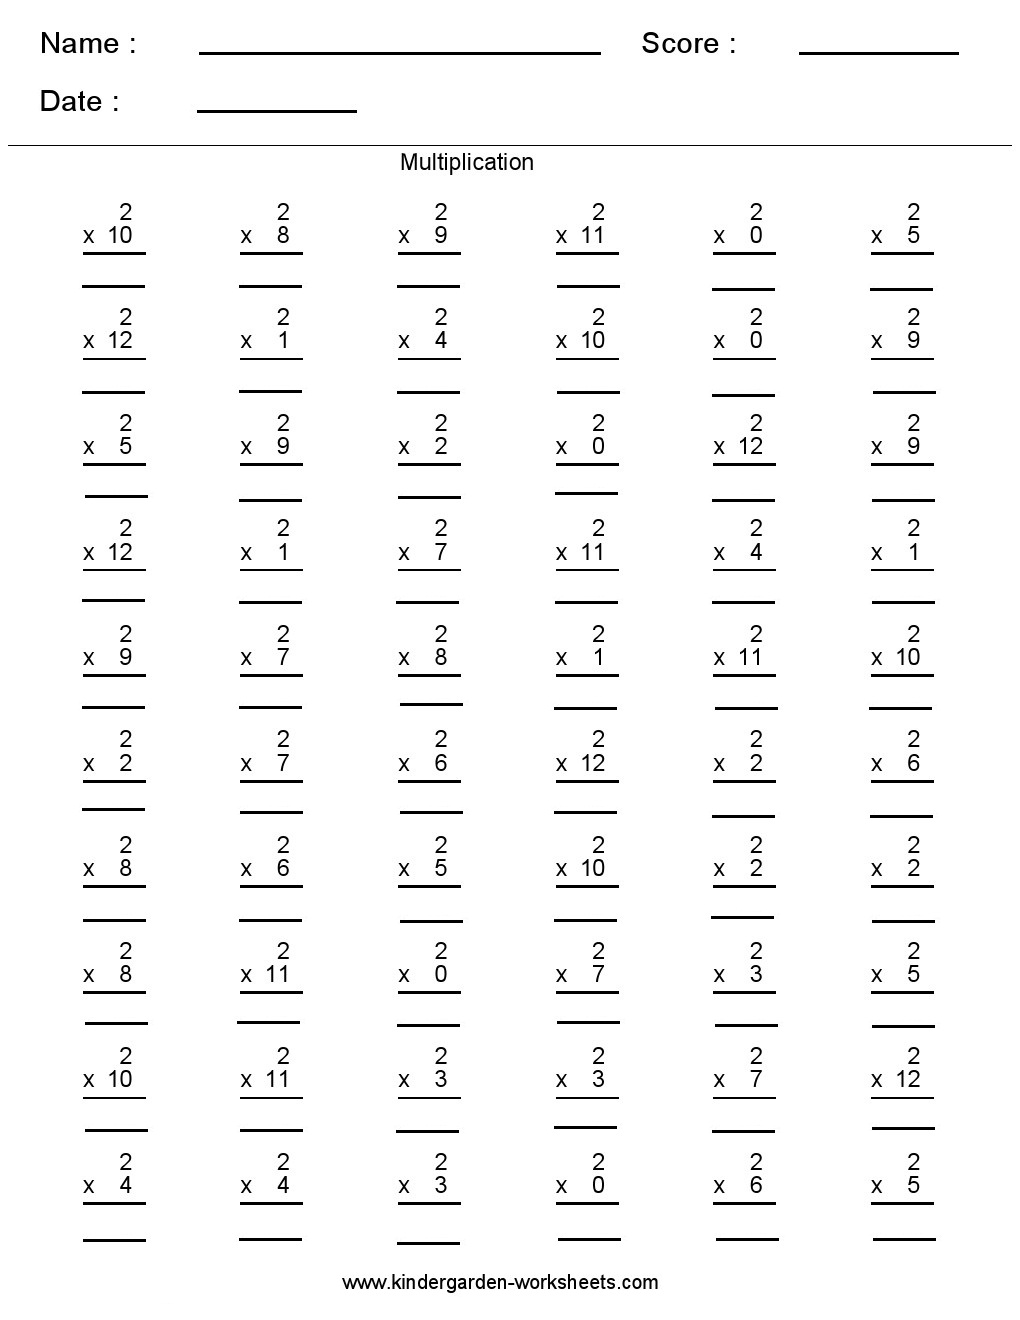 4 Best Images of 5th Grade Math Worksheets Multiplication ...